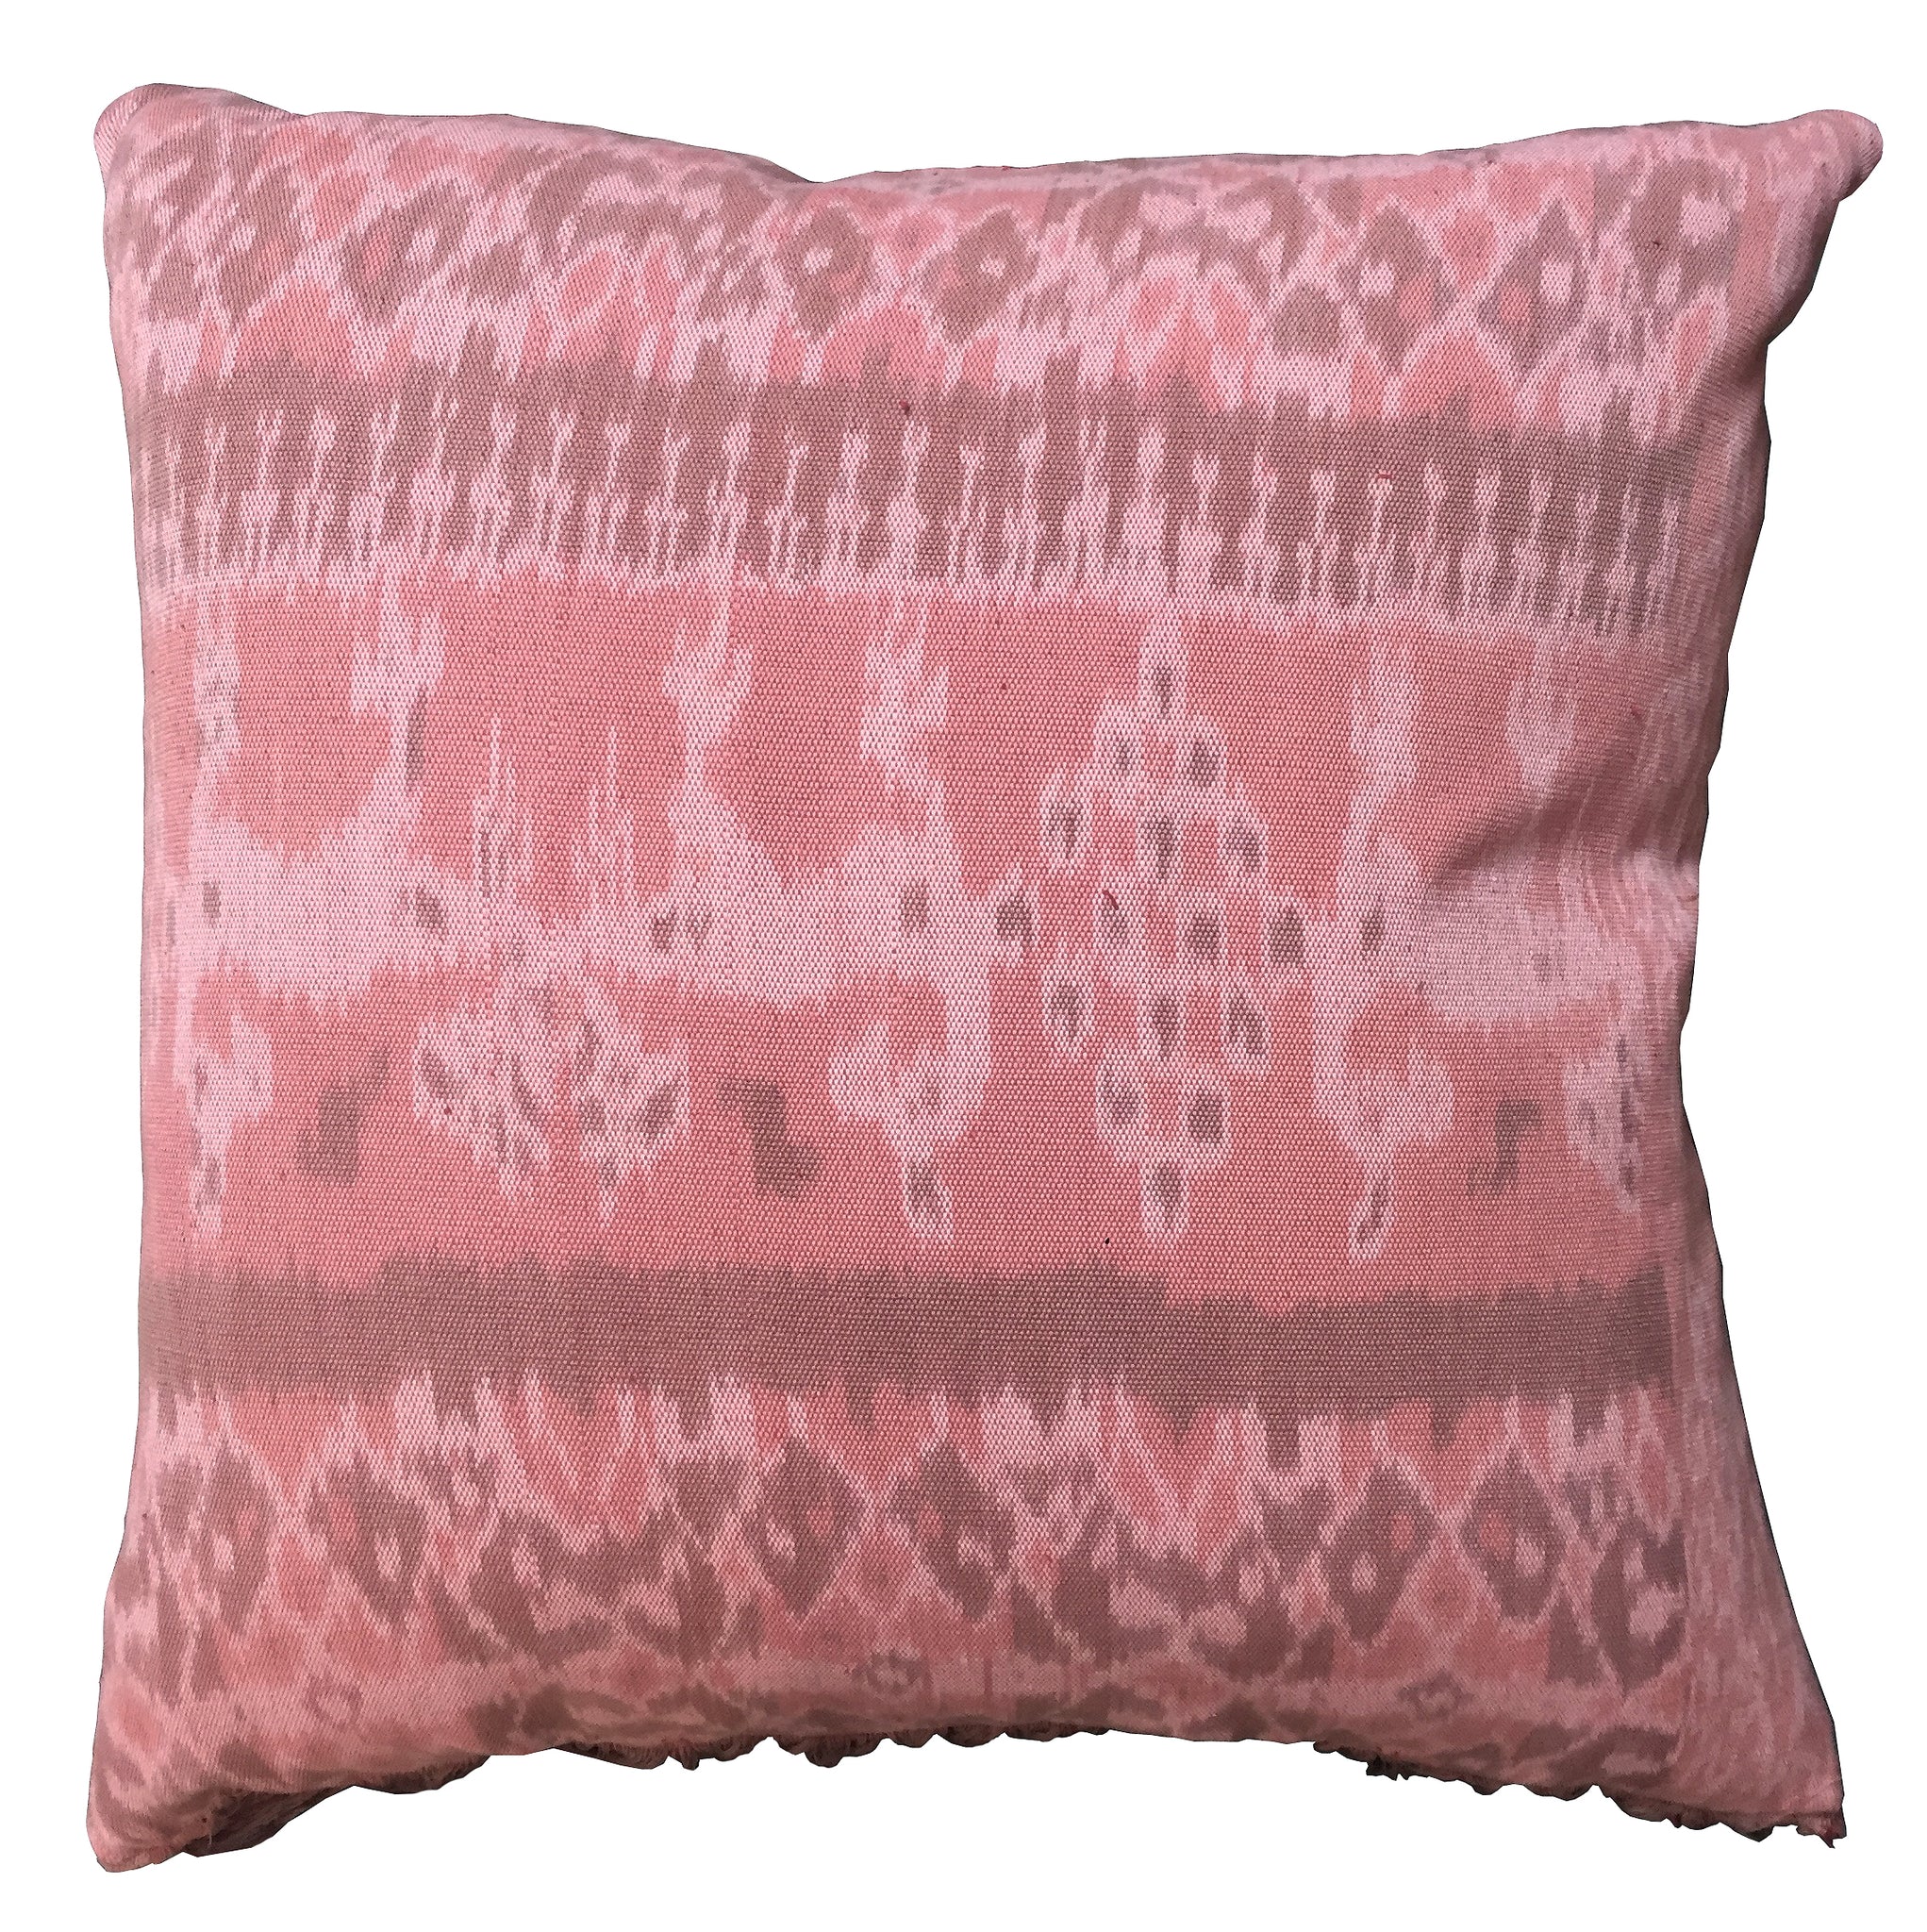 Indonesian Soft Pink Pillow